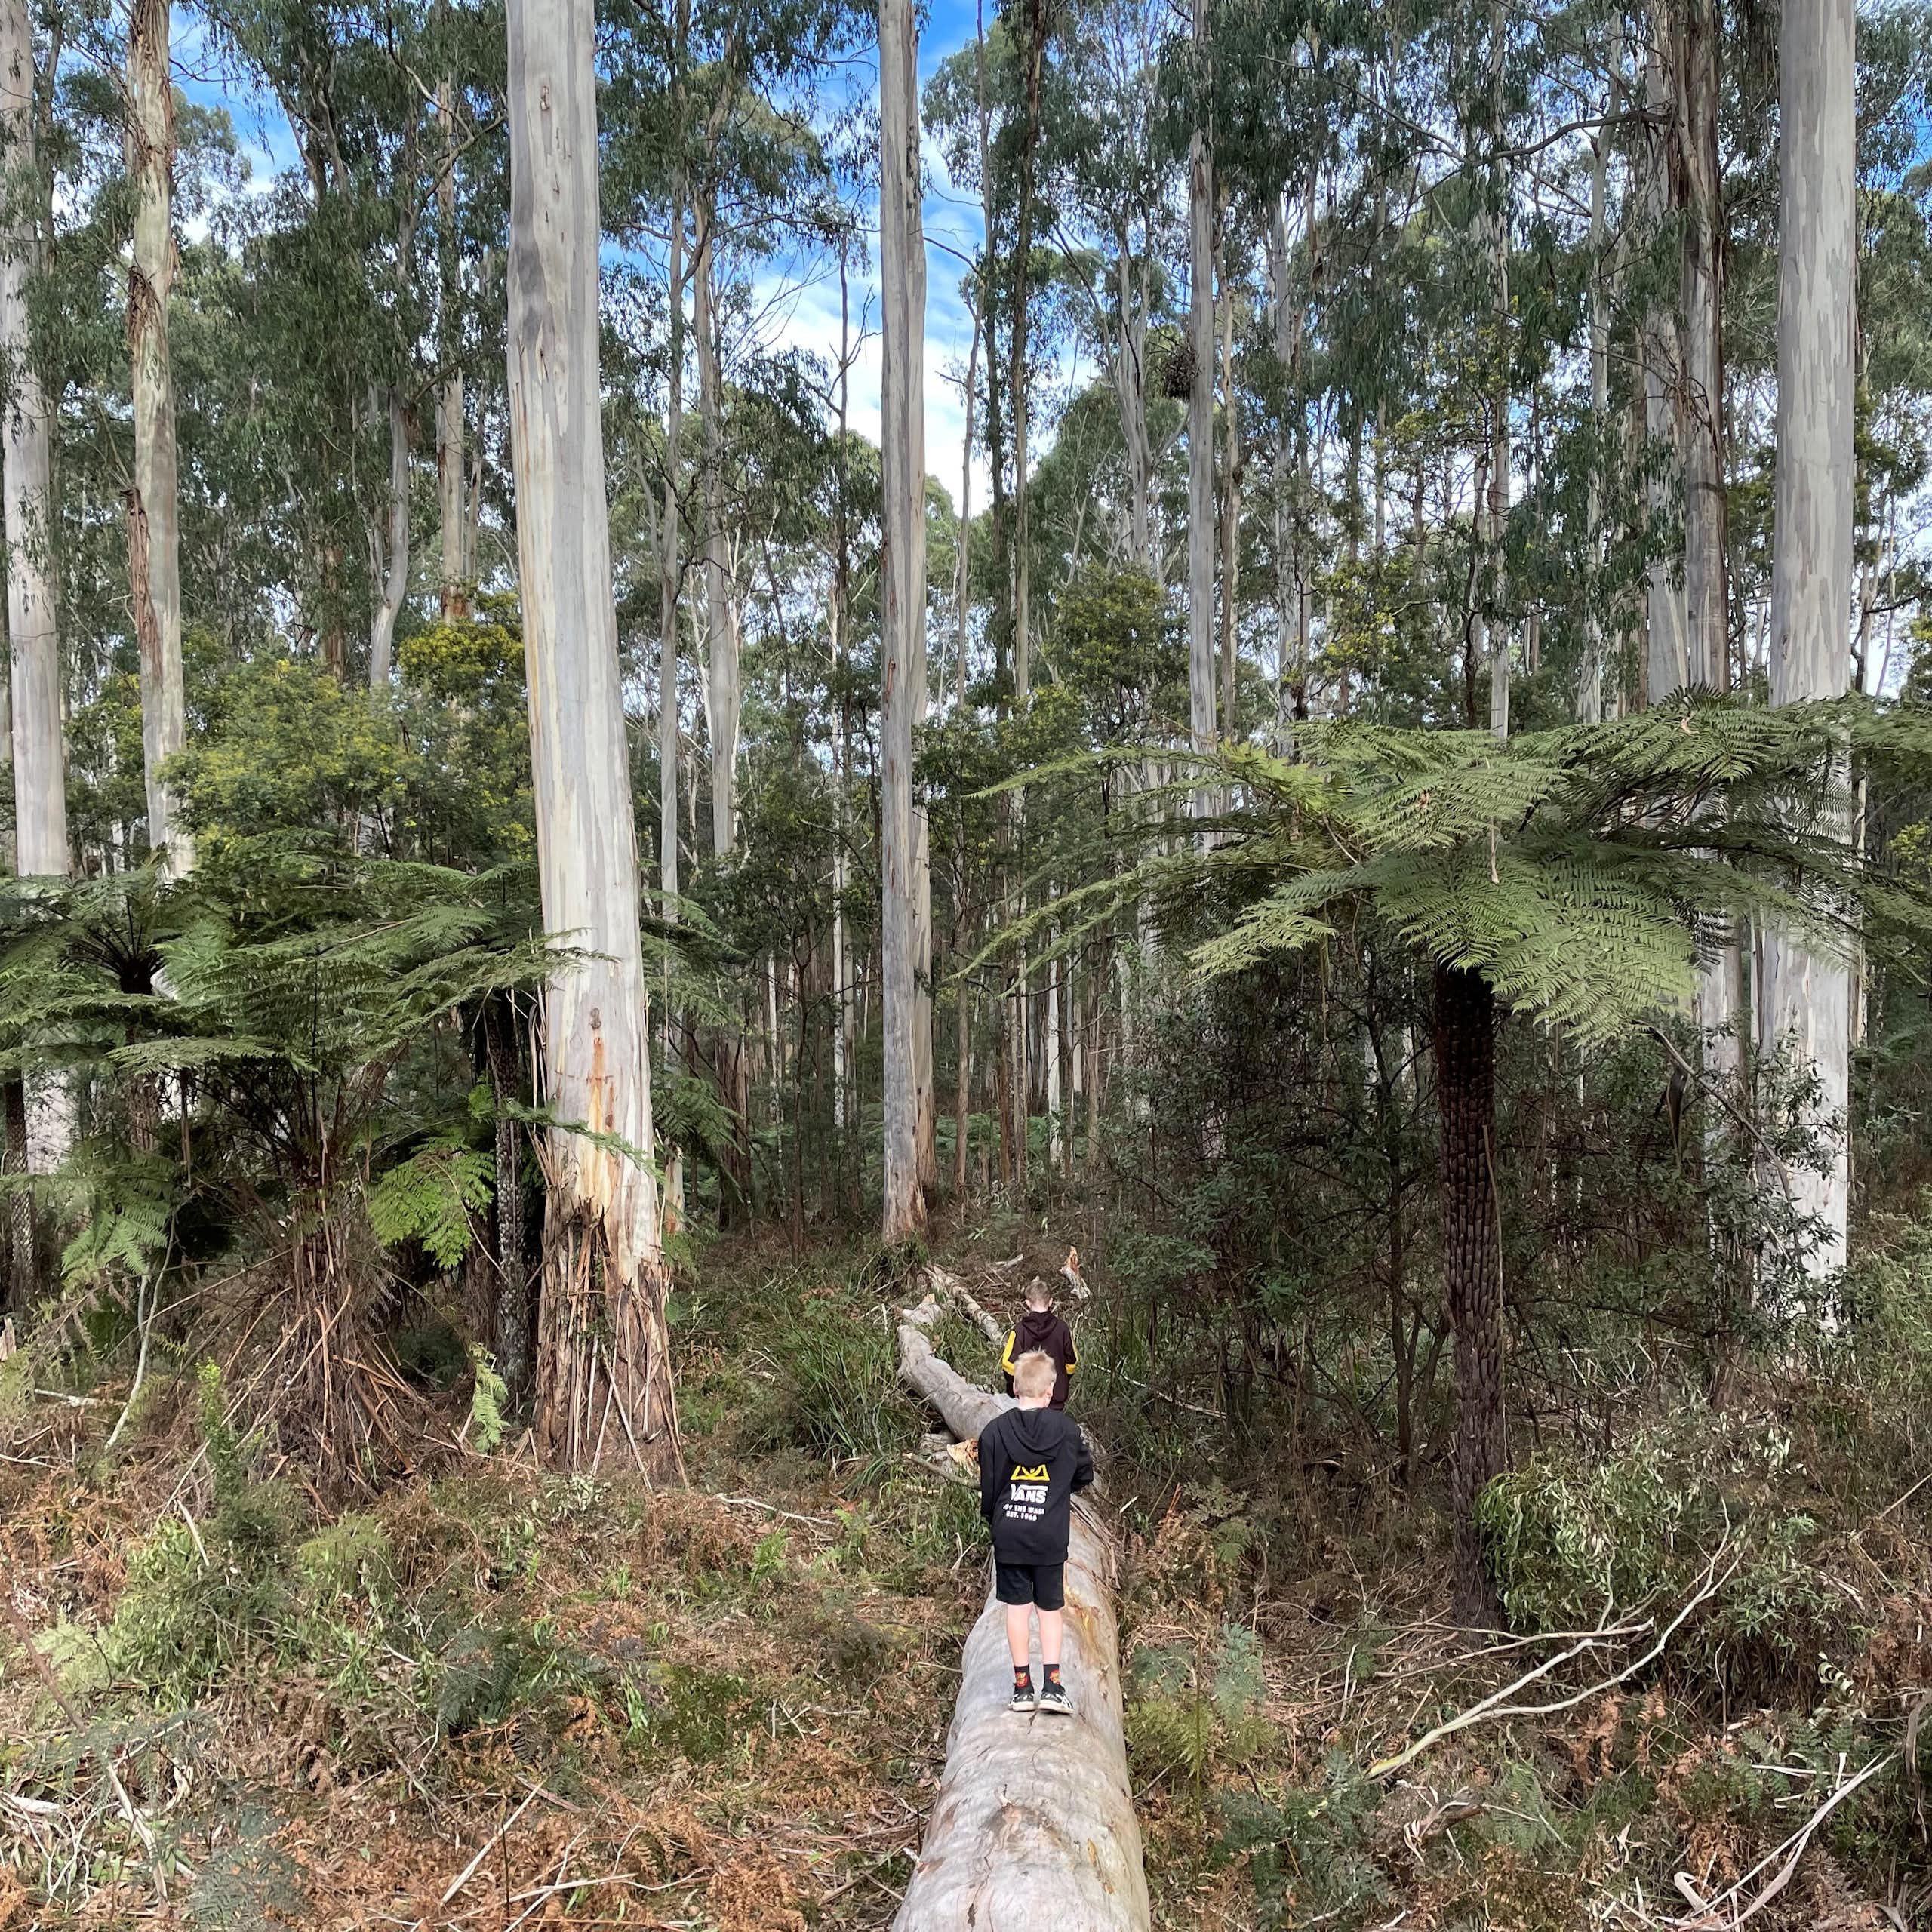 Two children walk along a fallen log in a eucalyptus forest